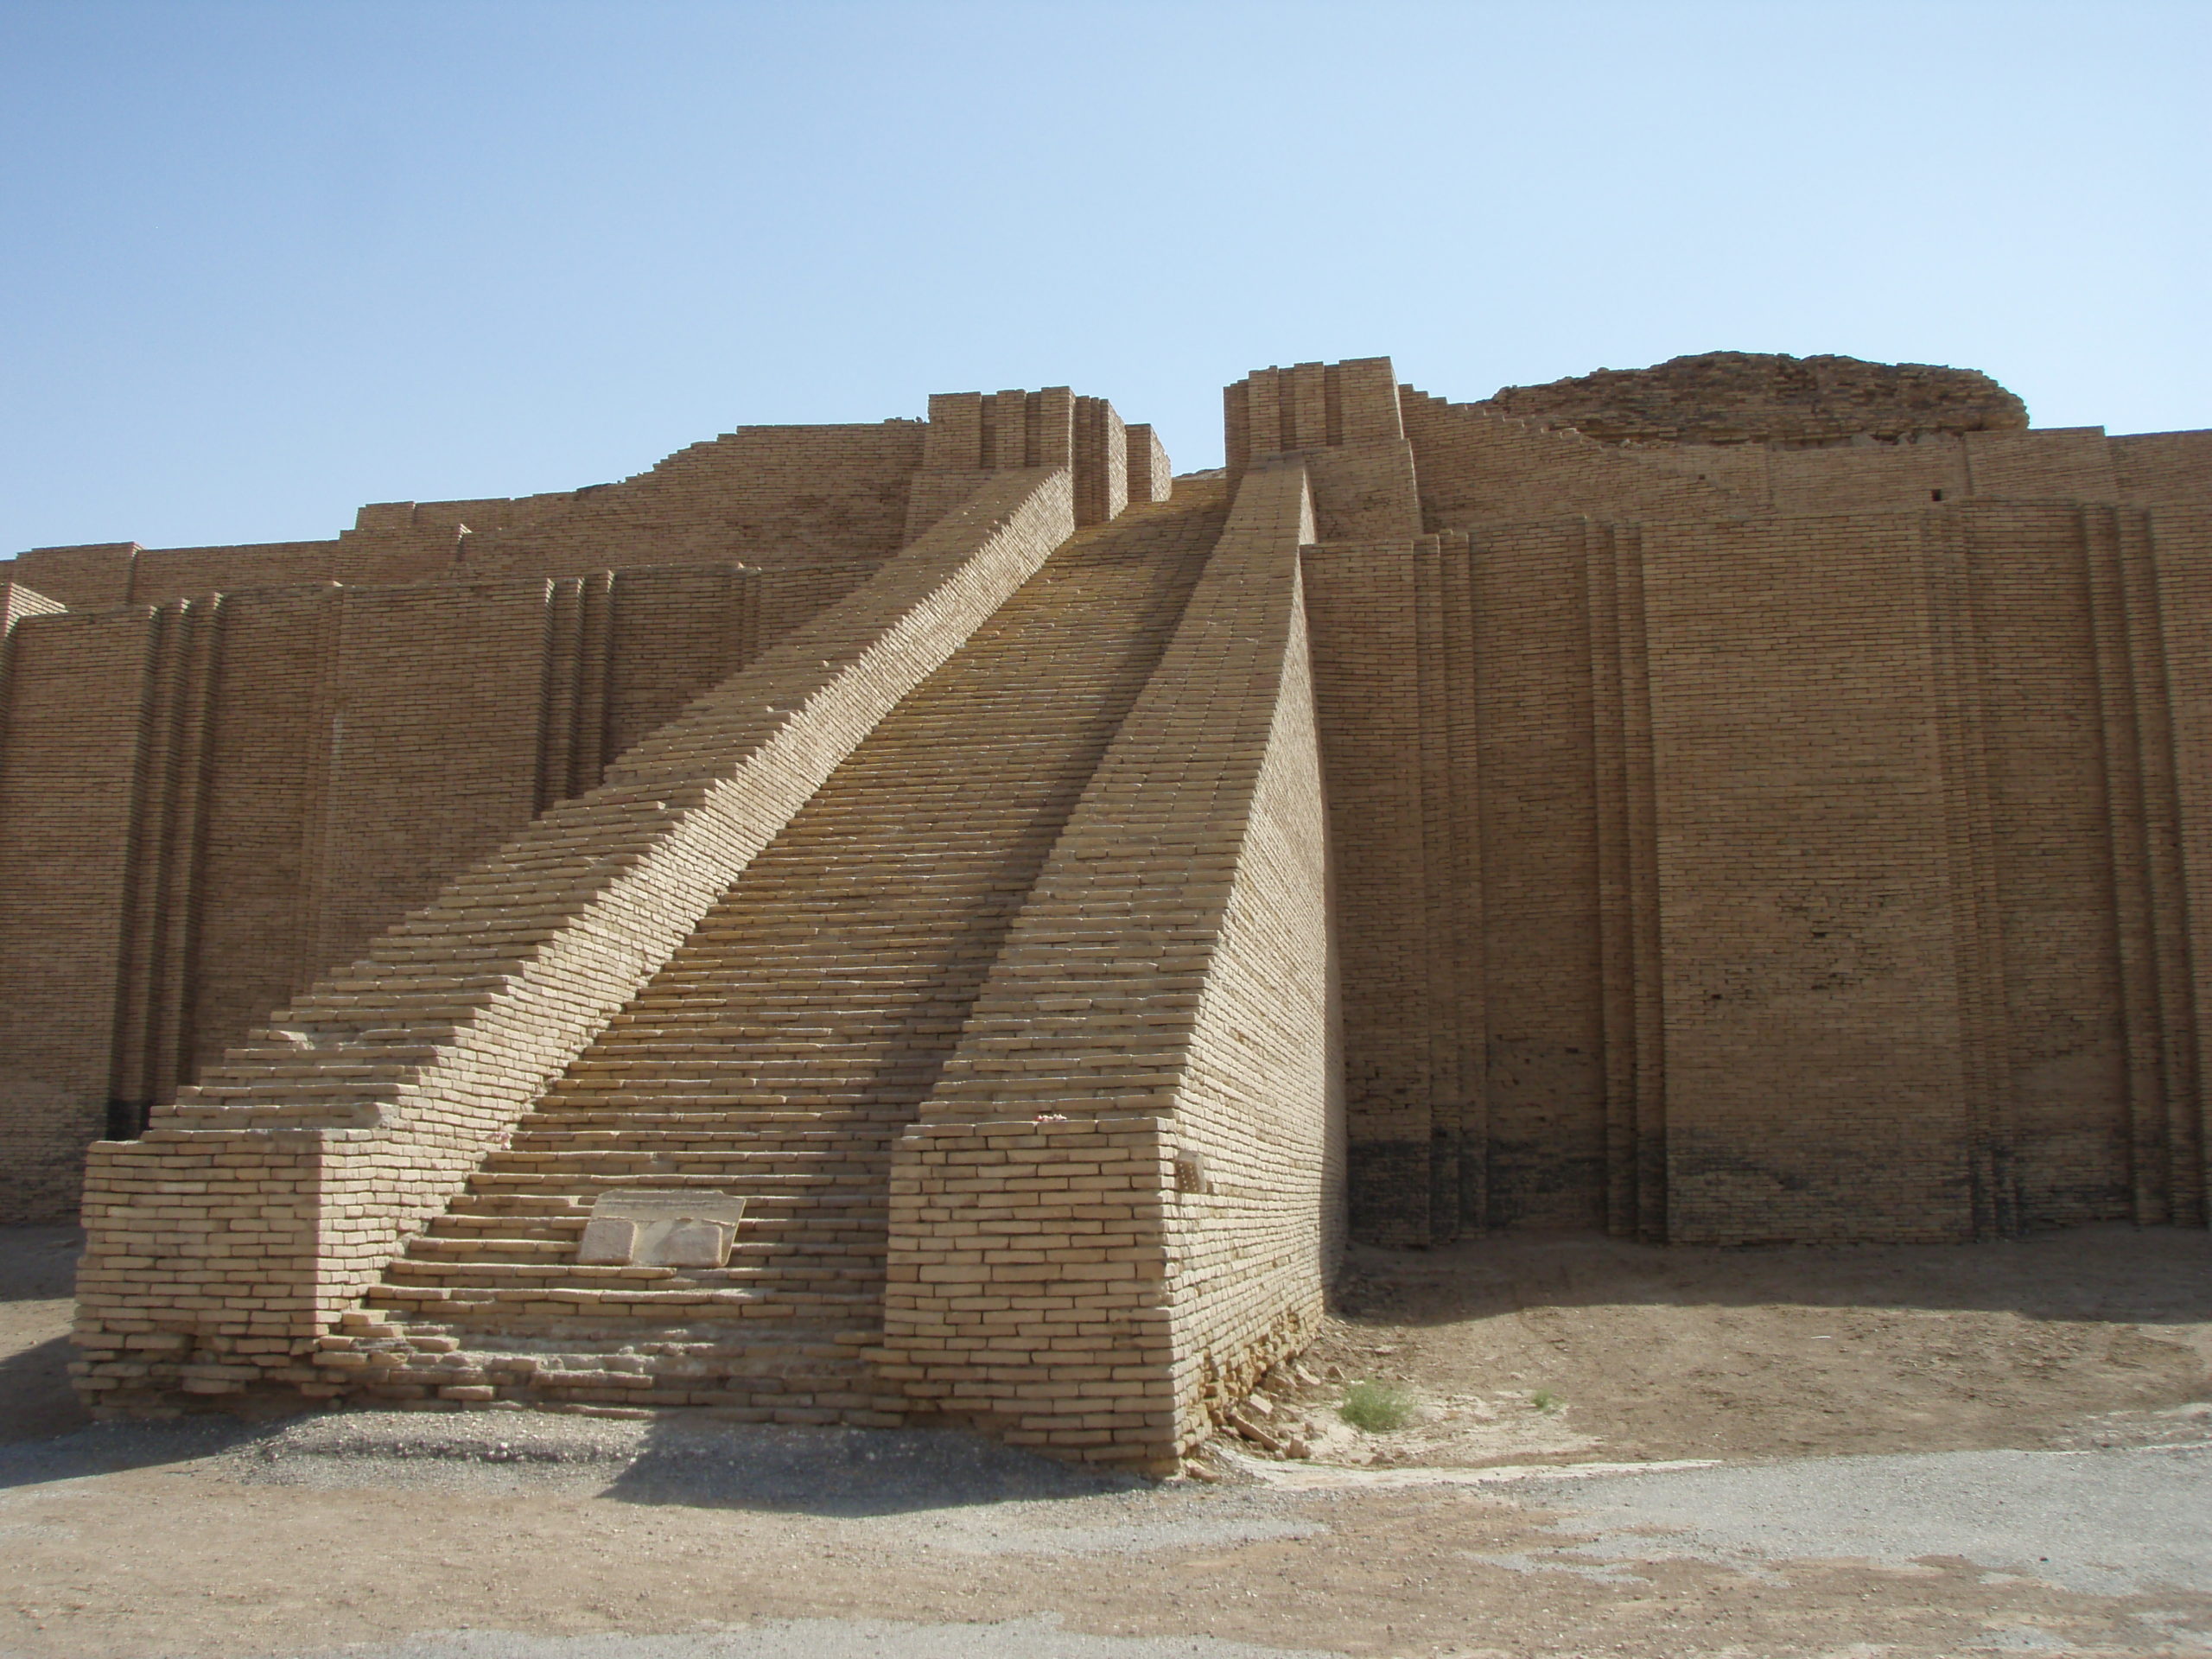 Ziggurat of Ur (largely reconstructed), c. 2100 B.C.E., mud brick and baked brick, Tell el-Mukayyar, Iraq (photo: Kaufingdude, CC BY-SA 3.0)